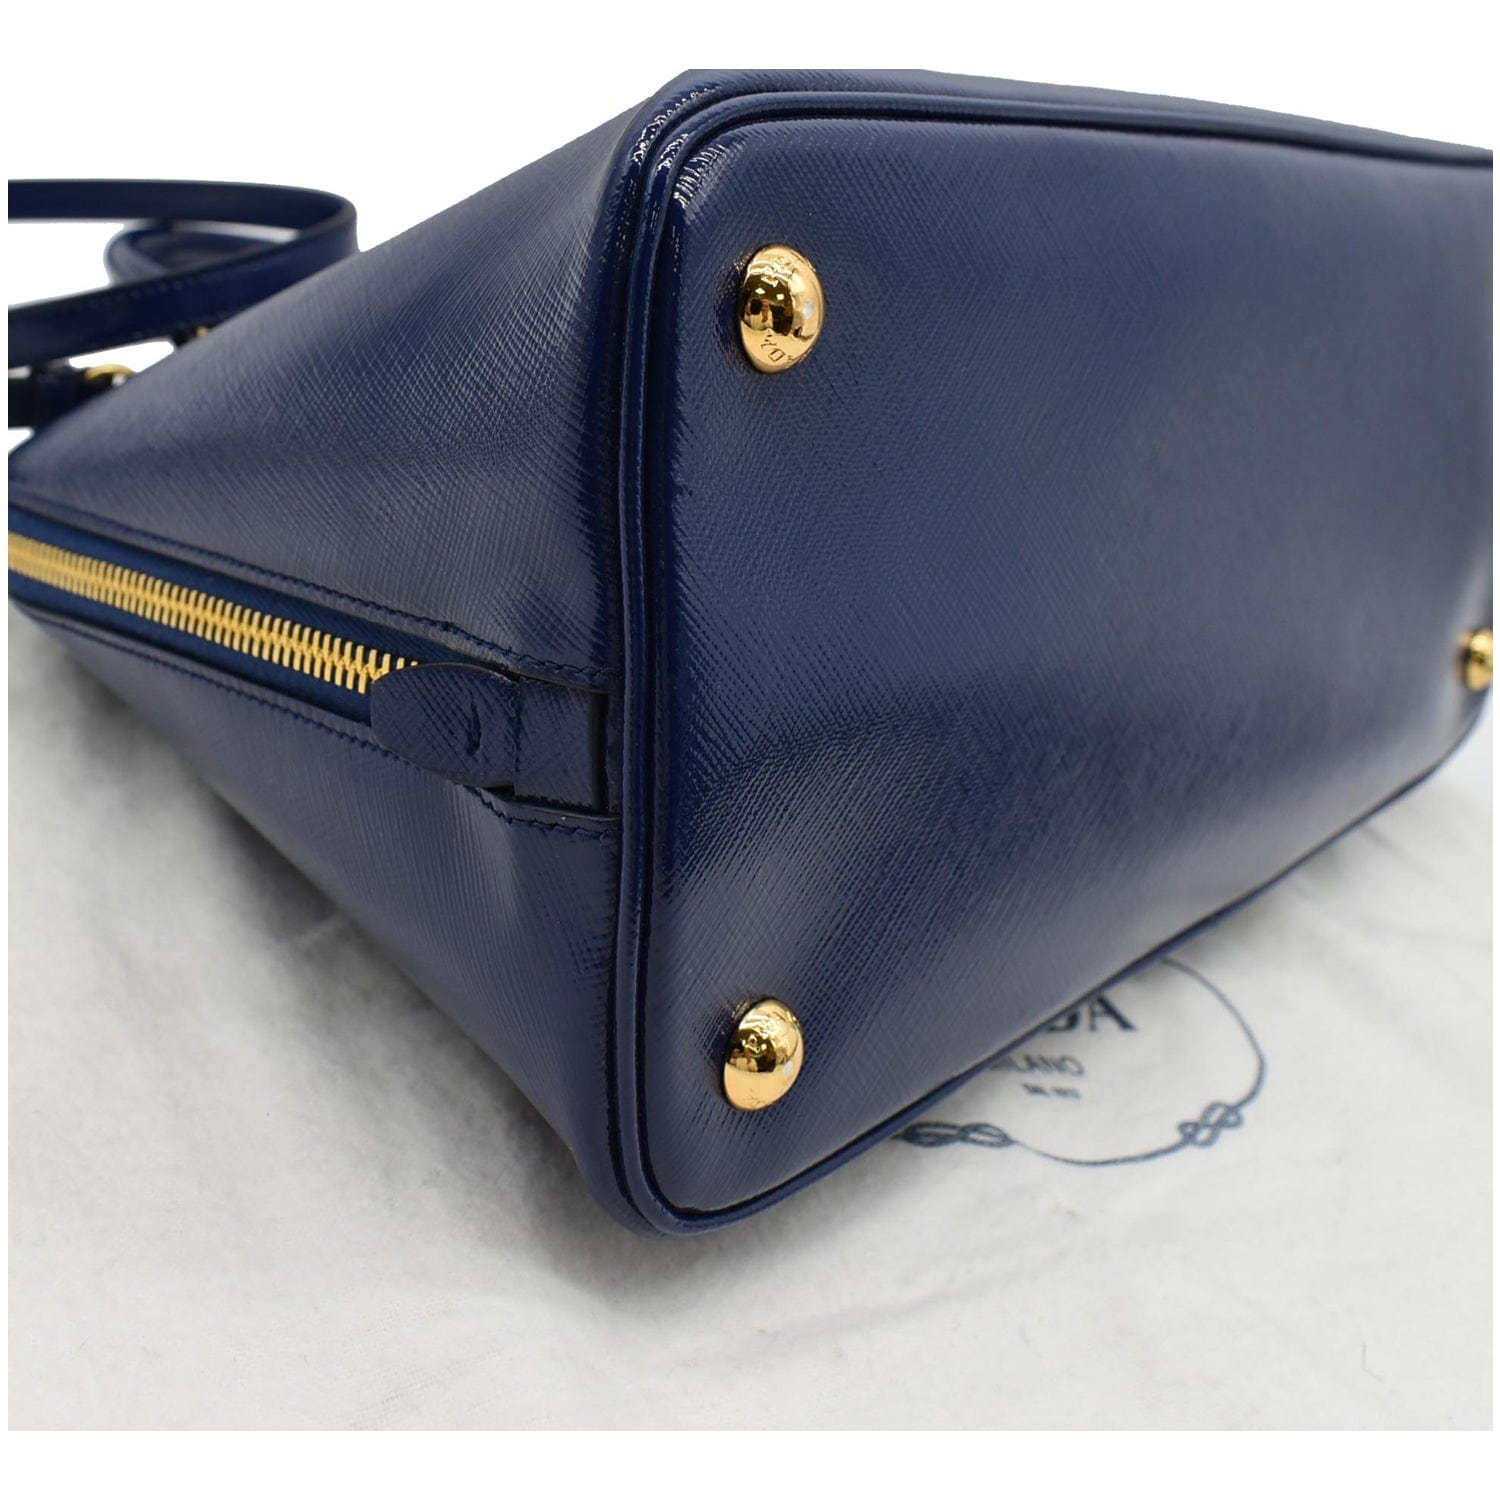 Prada Blue Saffiano Vernice Handbag QNB04WDABB001